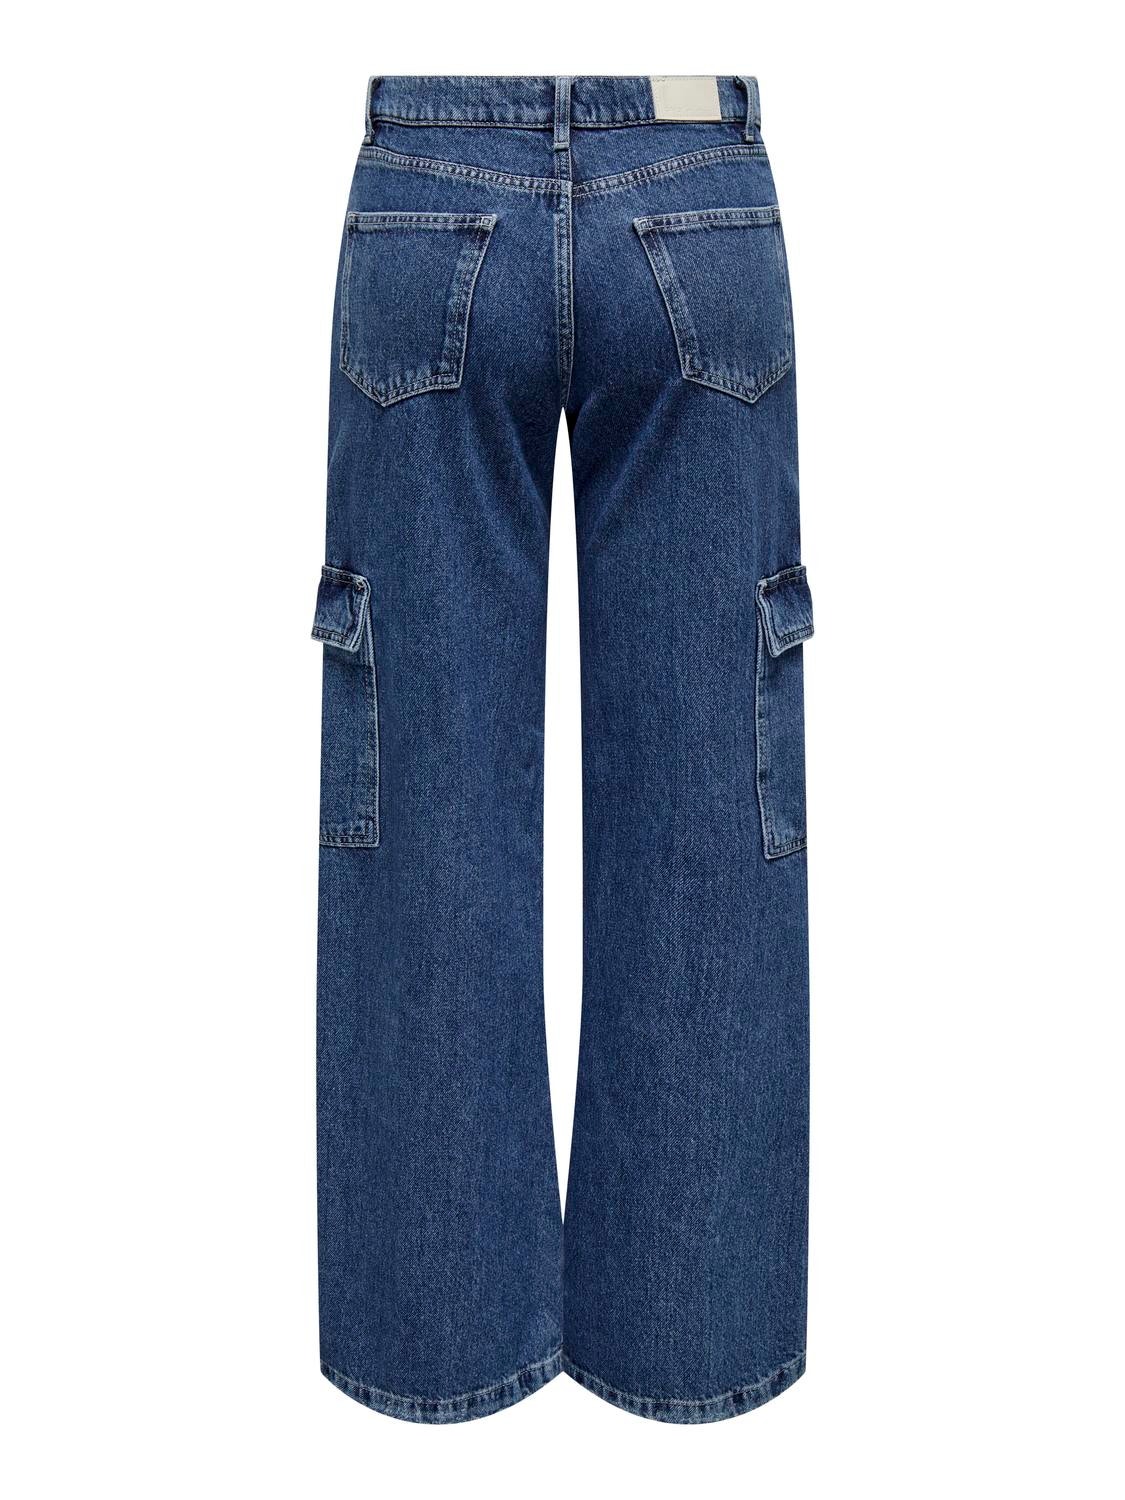 ONLY Wide Leg Fit Low waist Jeans -Dark Blue Denim - 15289232